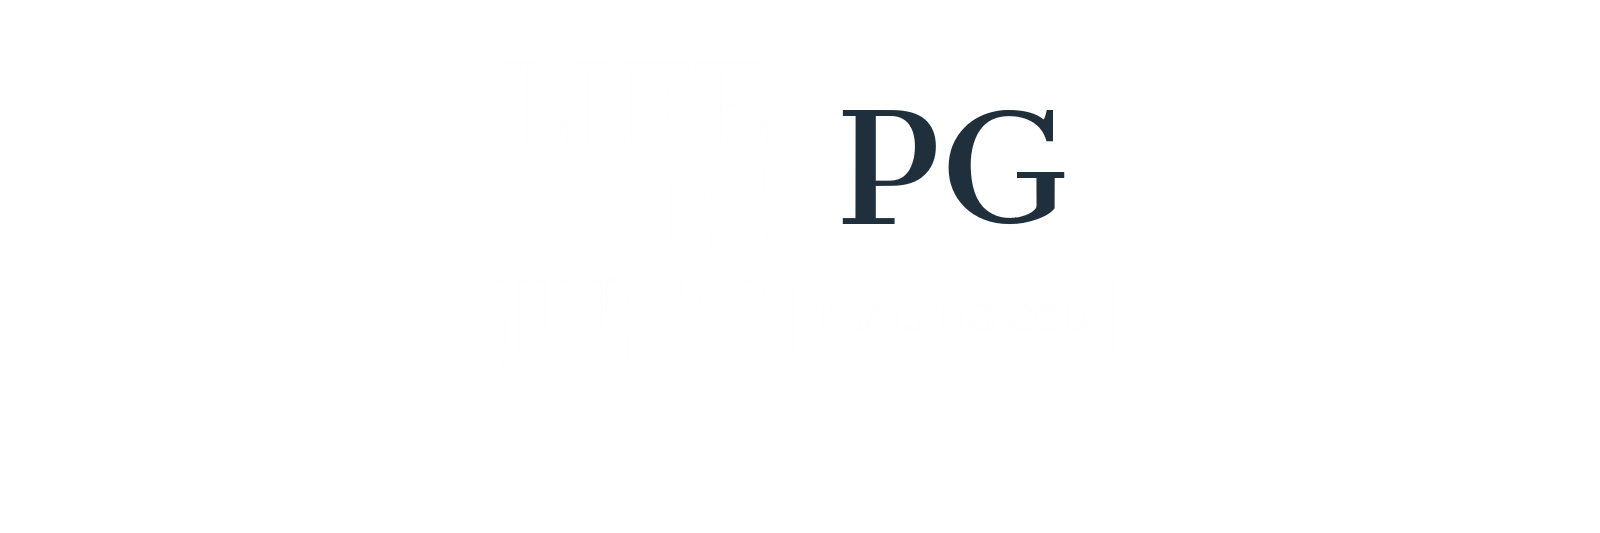 Life is Just PG "Praising God"